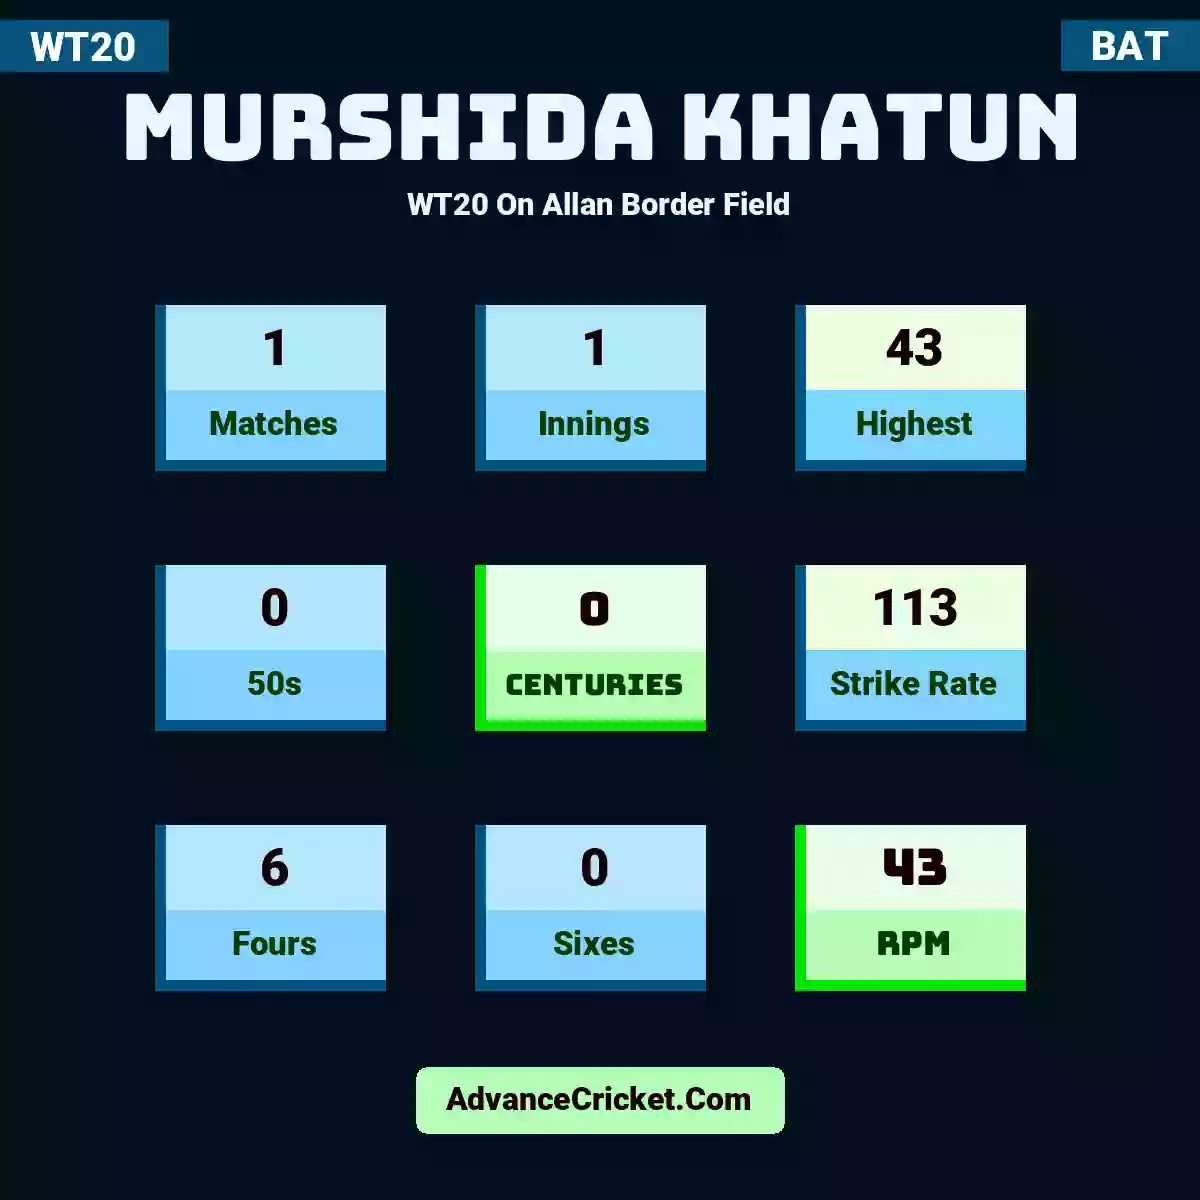 Murshida Khatun WT20  On Allan Border Field, Murshida Khatun played 1 matches, scored 43 runs as highest, 0 half-centuries, and 0 centuries, with a strike rate of 113. M.Khatun hit 6 fours and 0 sixes, with an RPM of 43.